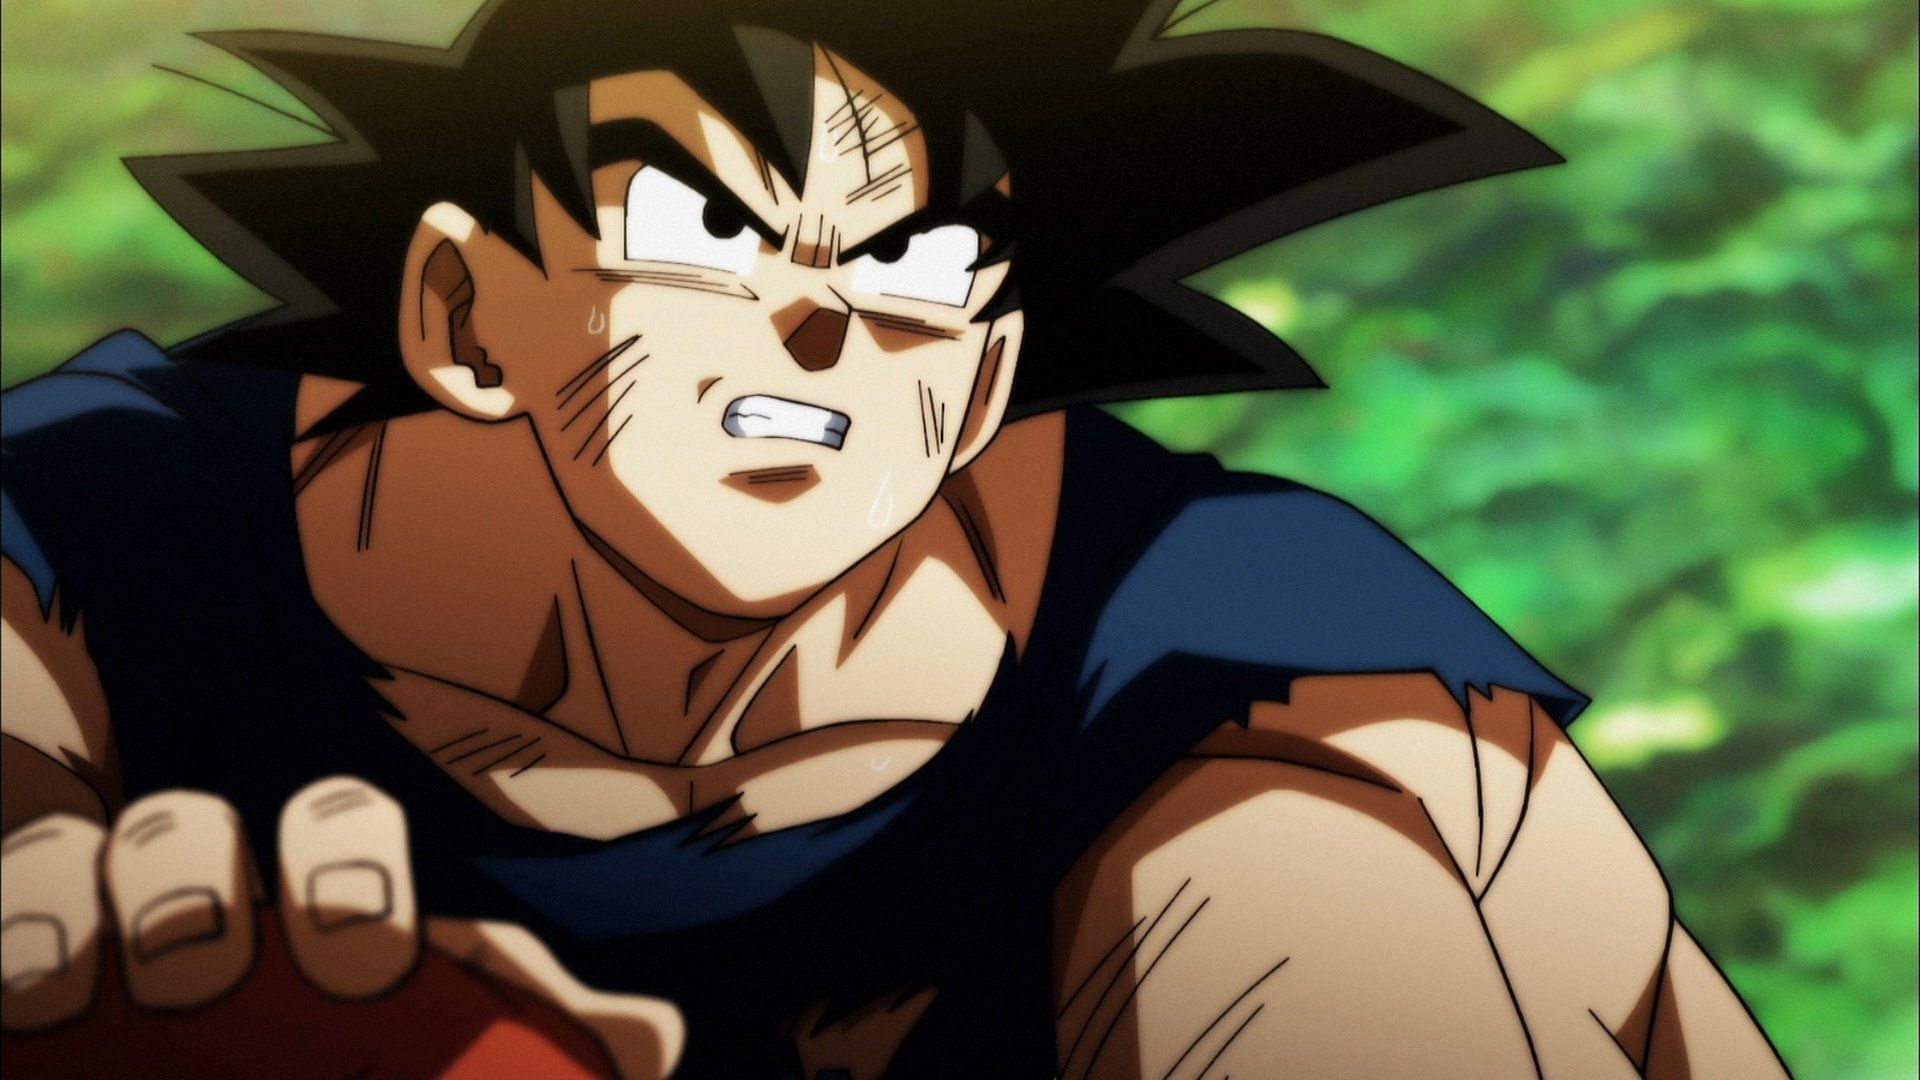 Goku has had many close calls throughout the franchise (Image via Toei Animation)